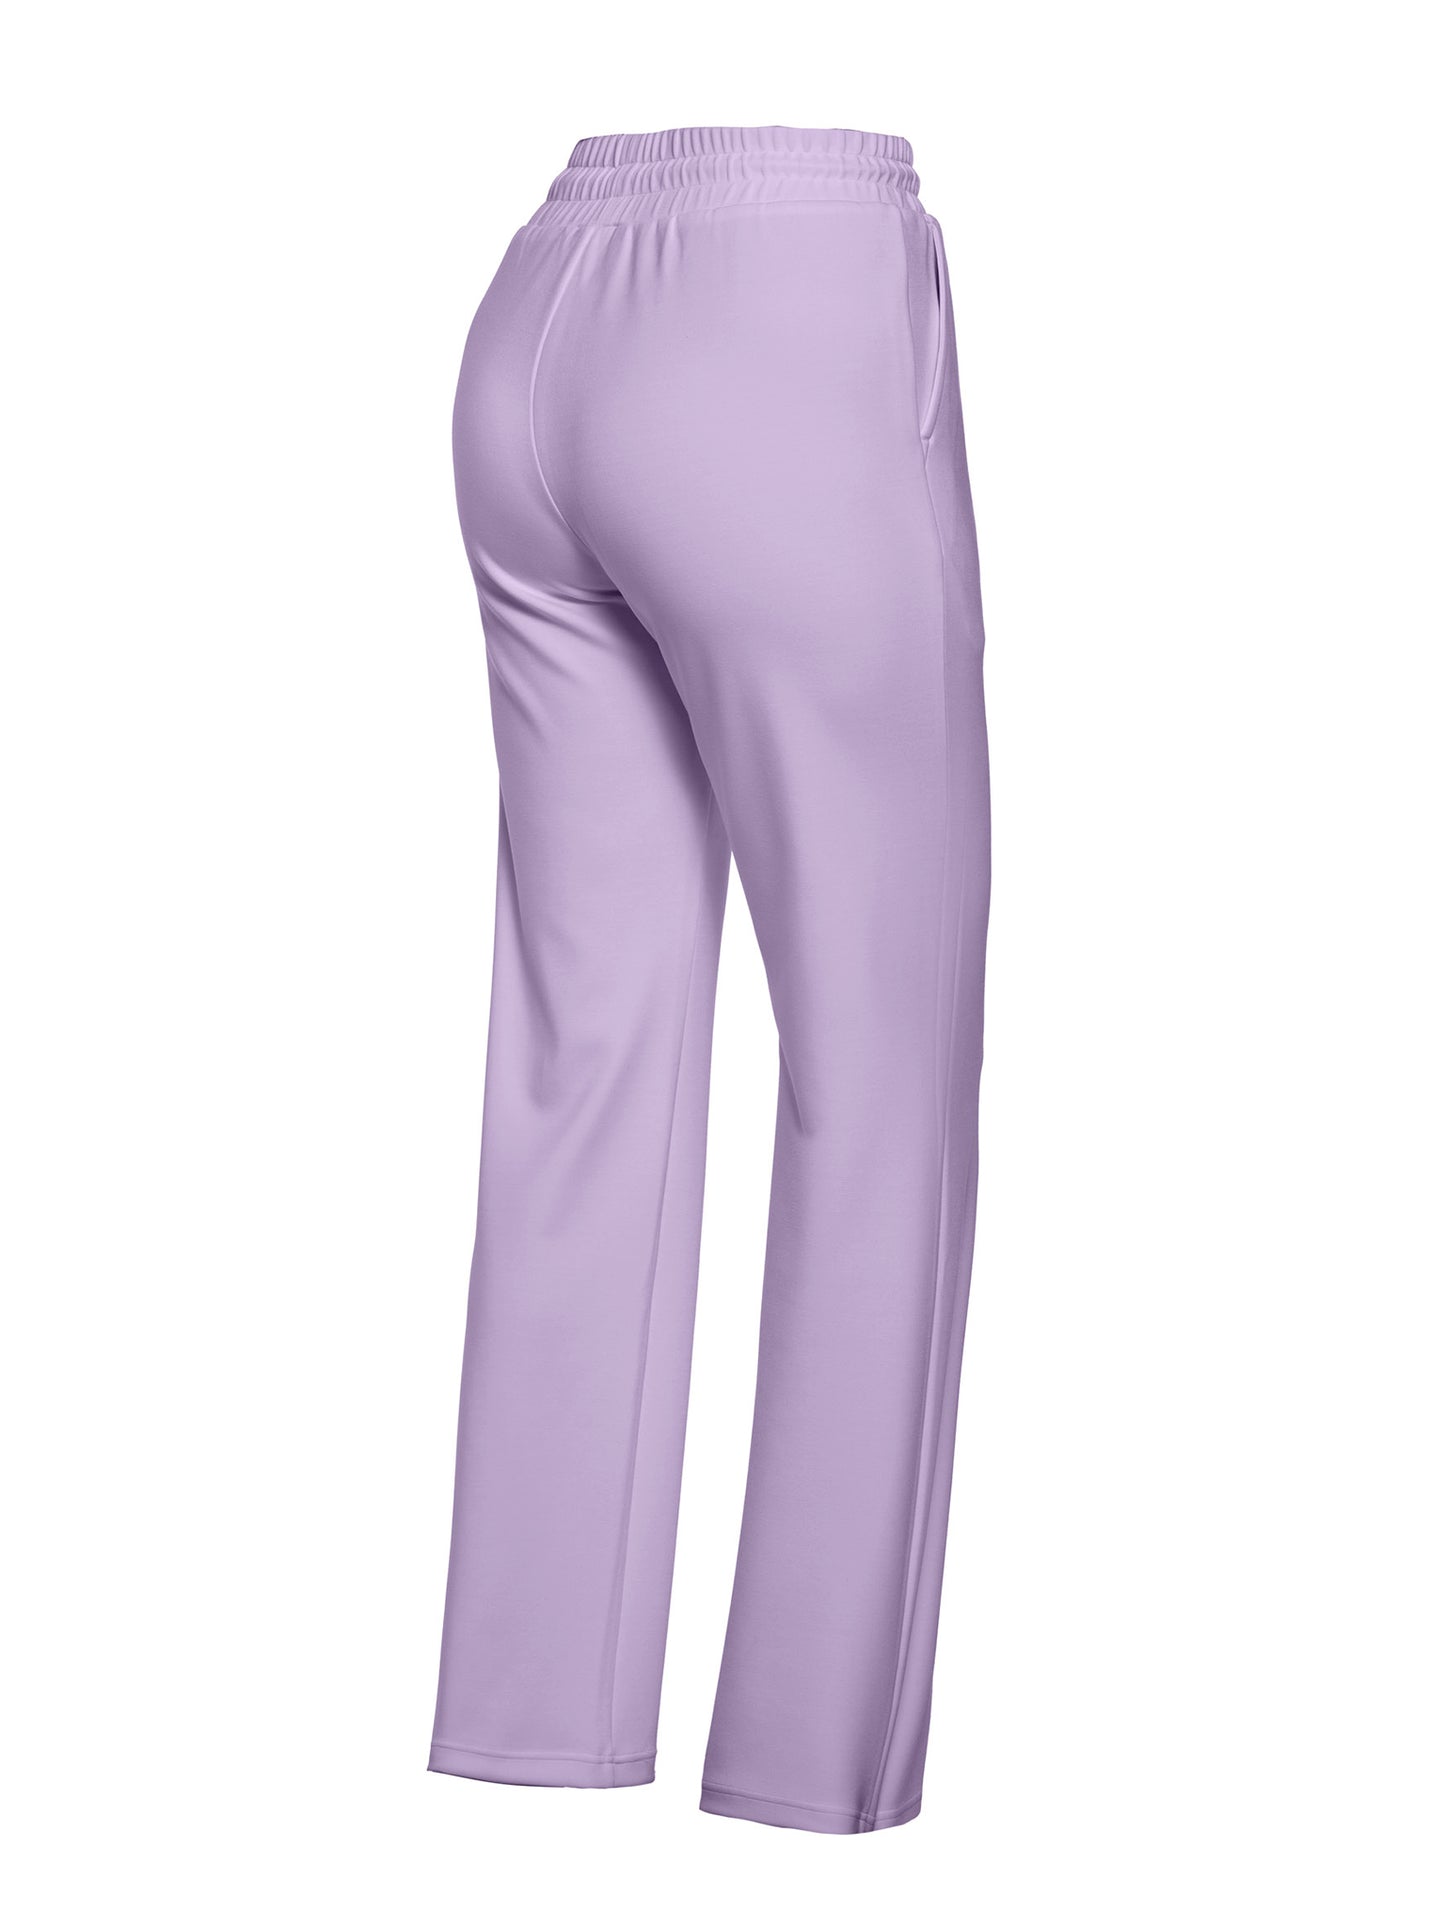 BROOKLYN pants lilac